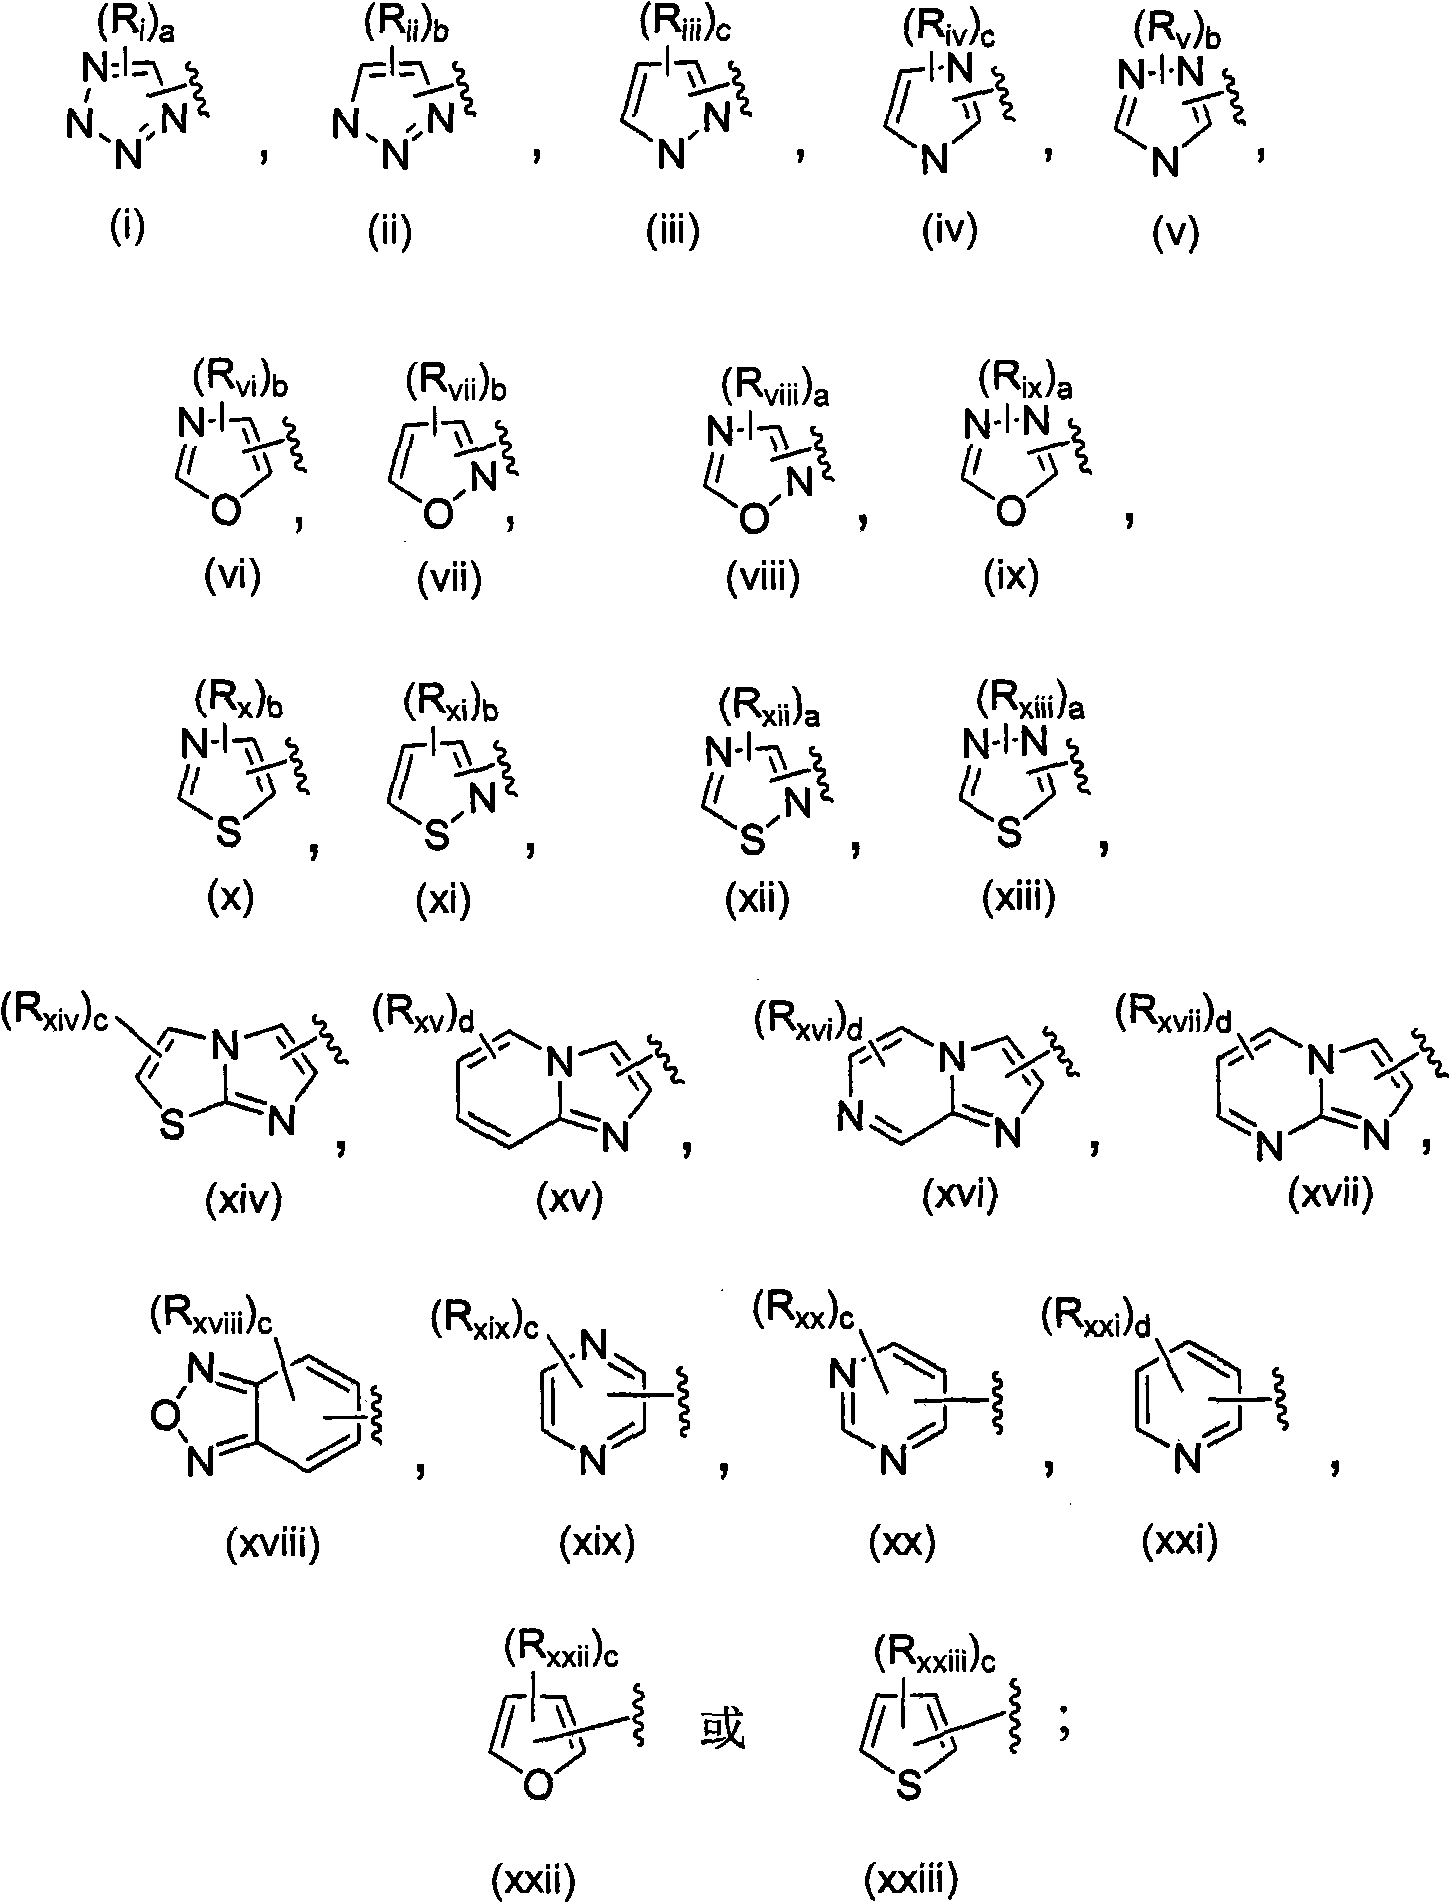 5-heteroaryl substituted indazoles as kinase inhibitors